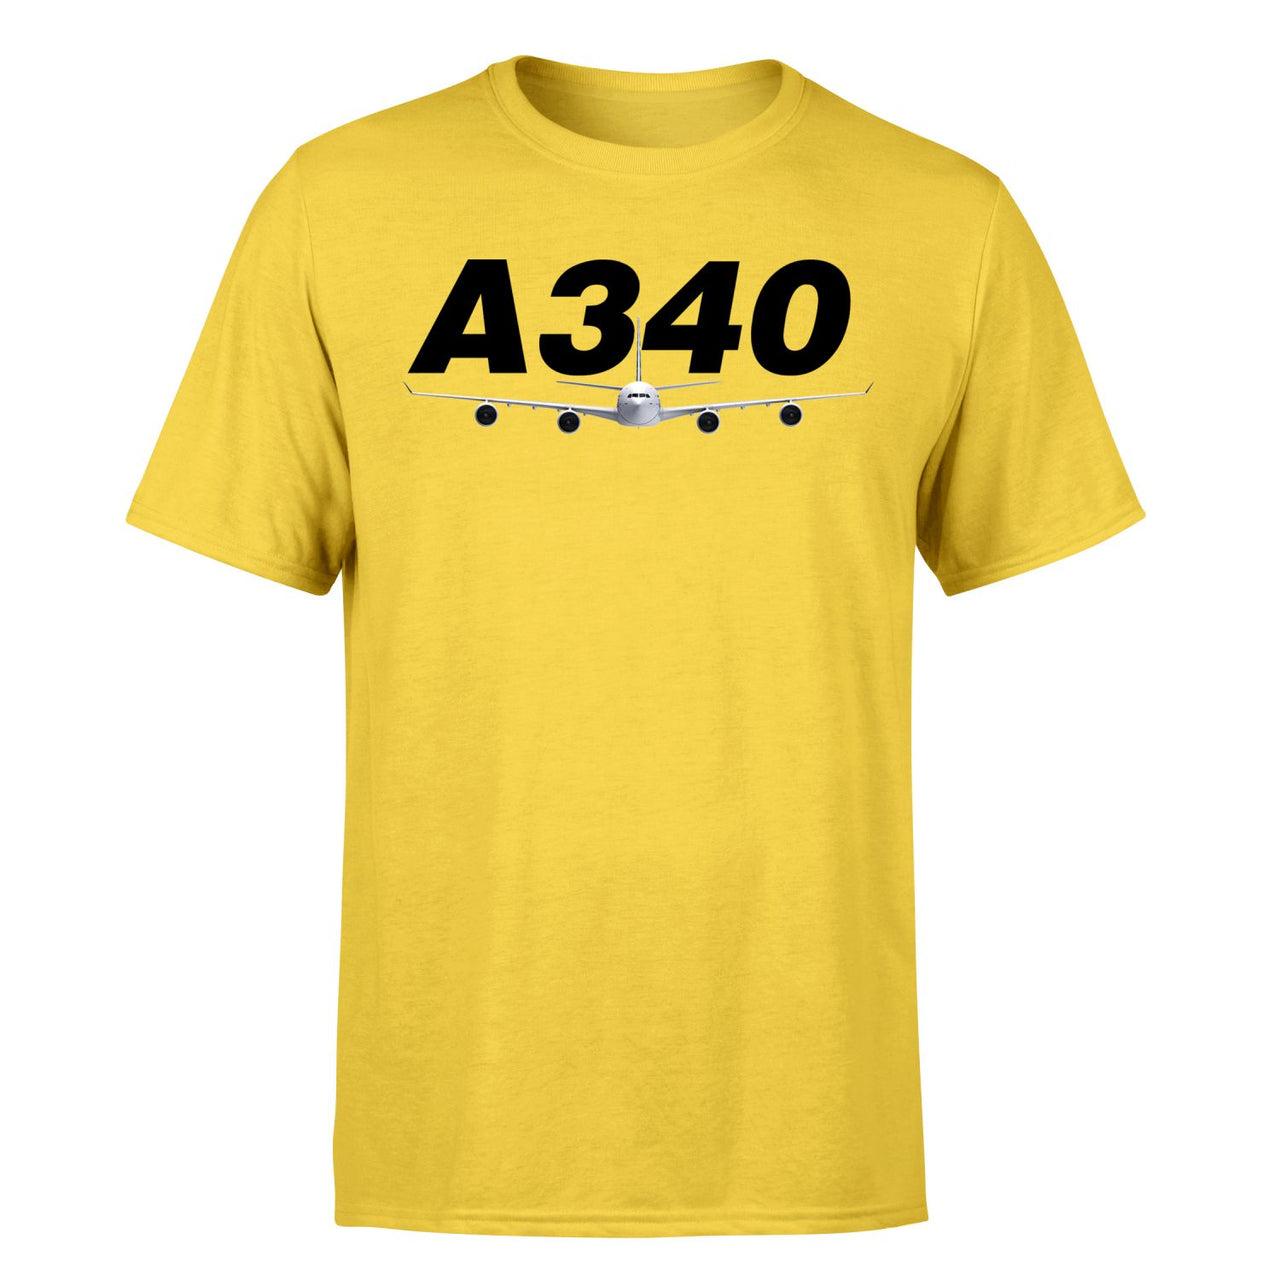 Super Airbus A340 Designed T-Shirts